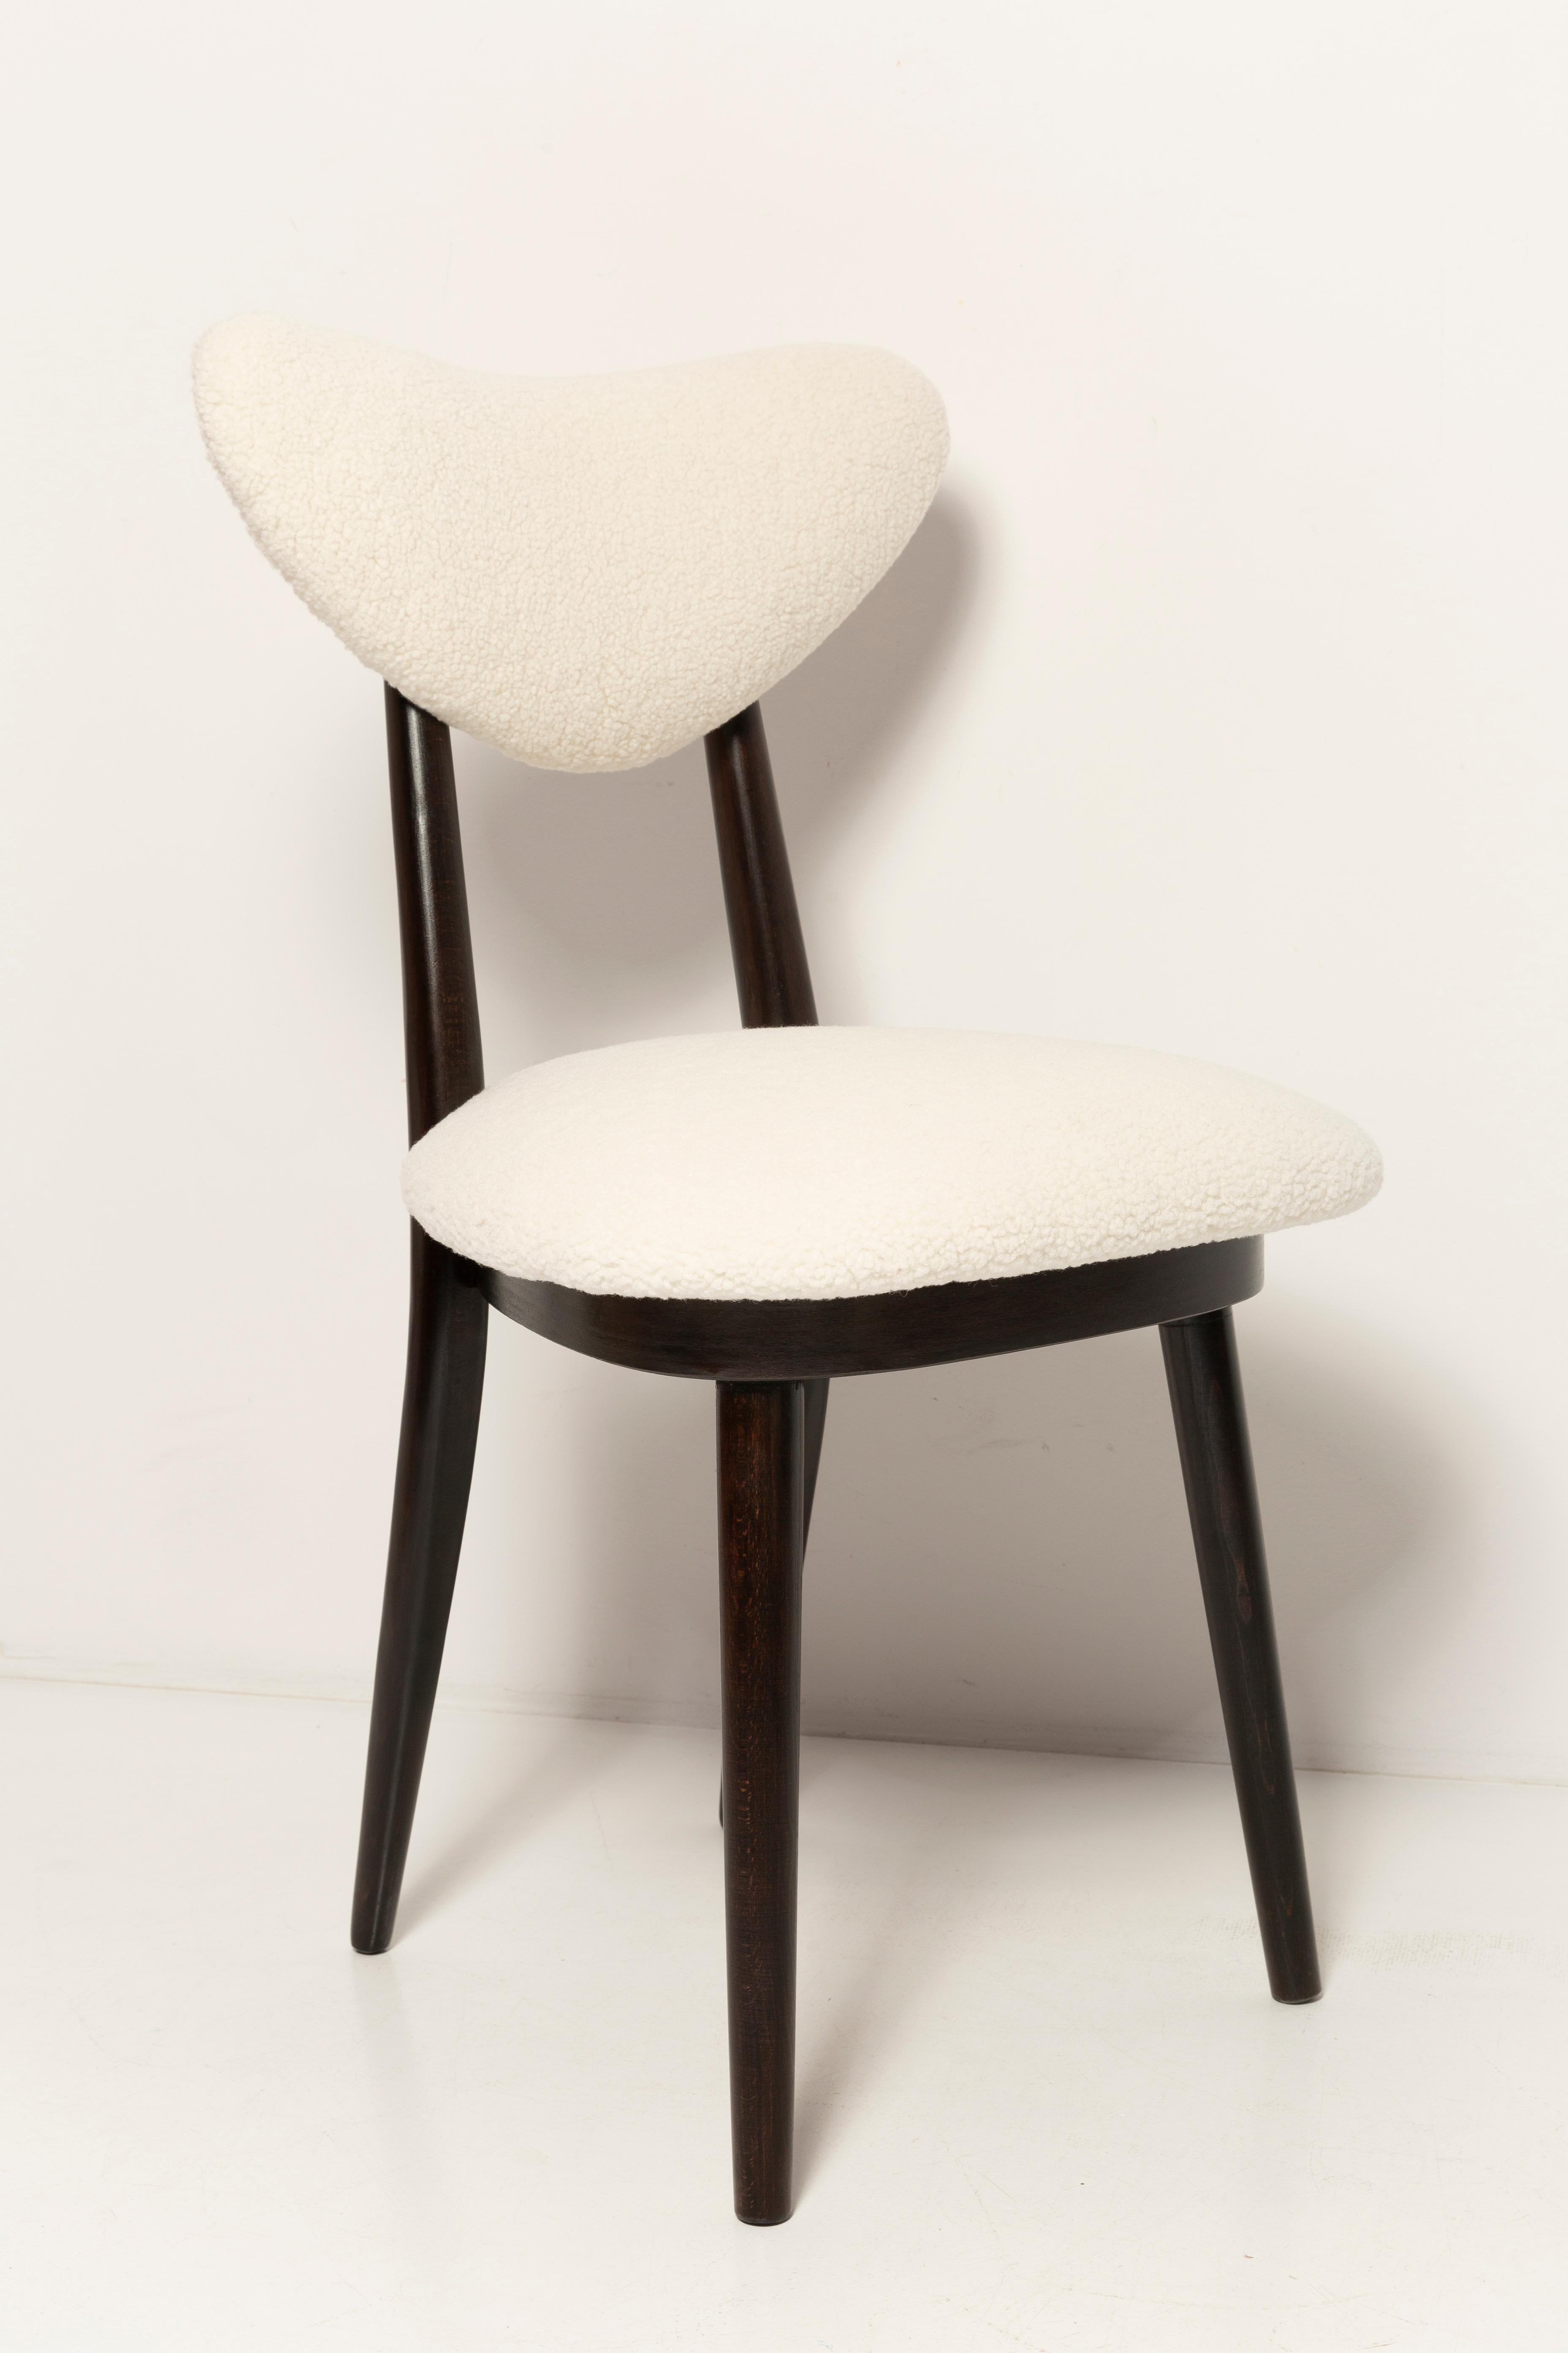 20th Century Midcentury Light Bouclé Heart Chair, Europe, 1960s For Sale